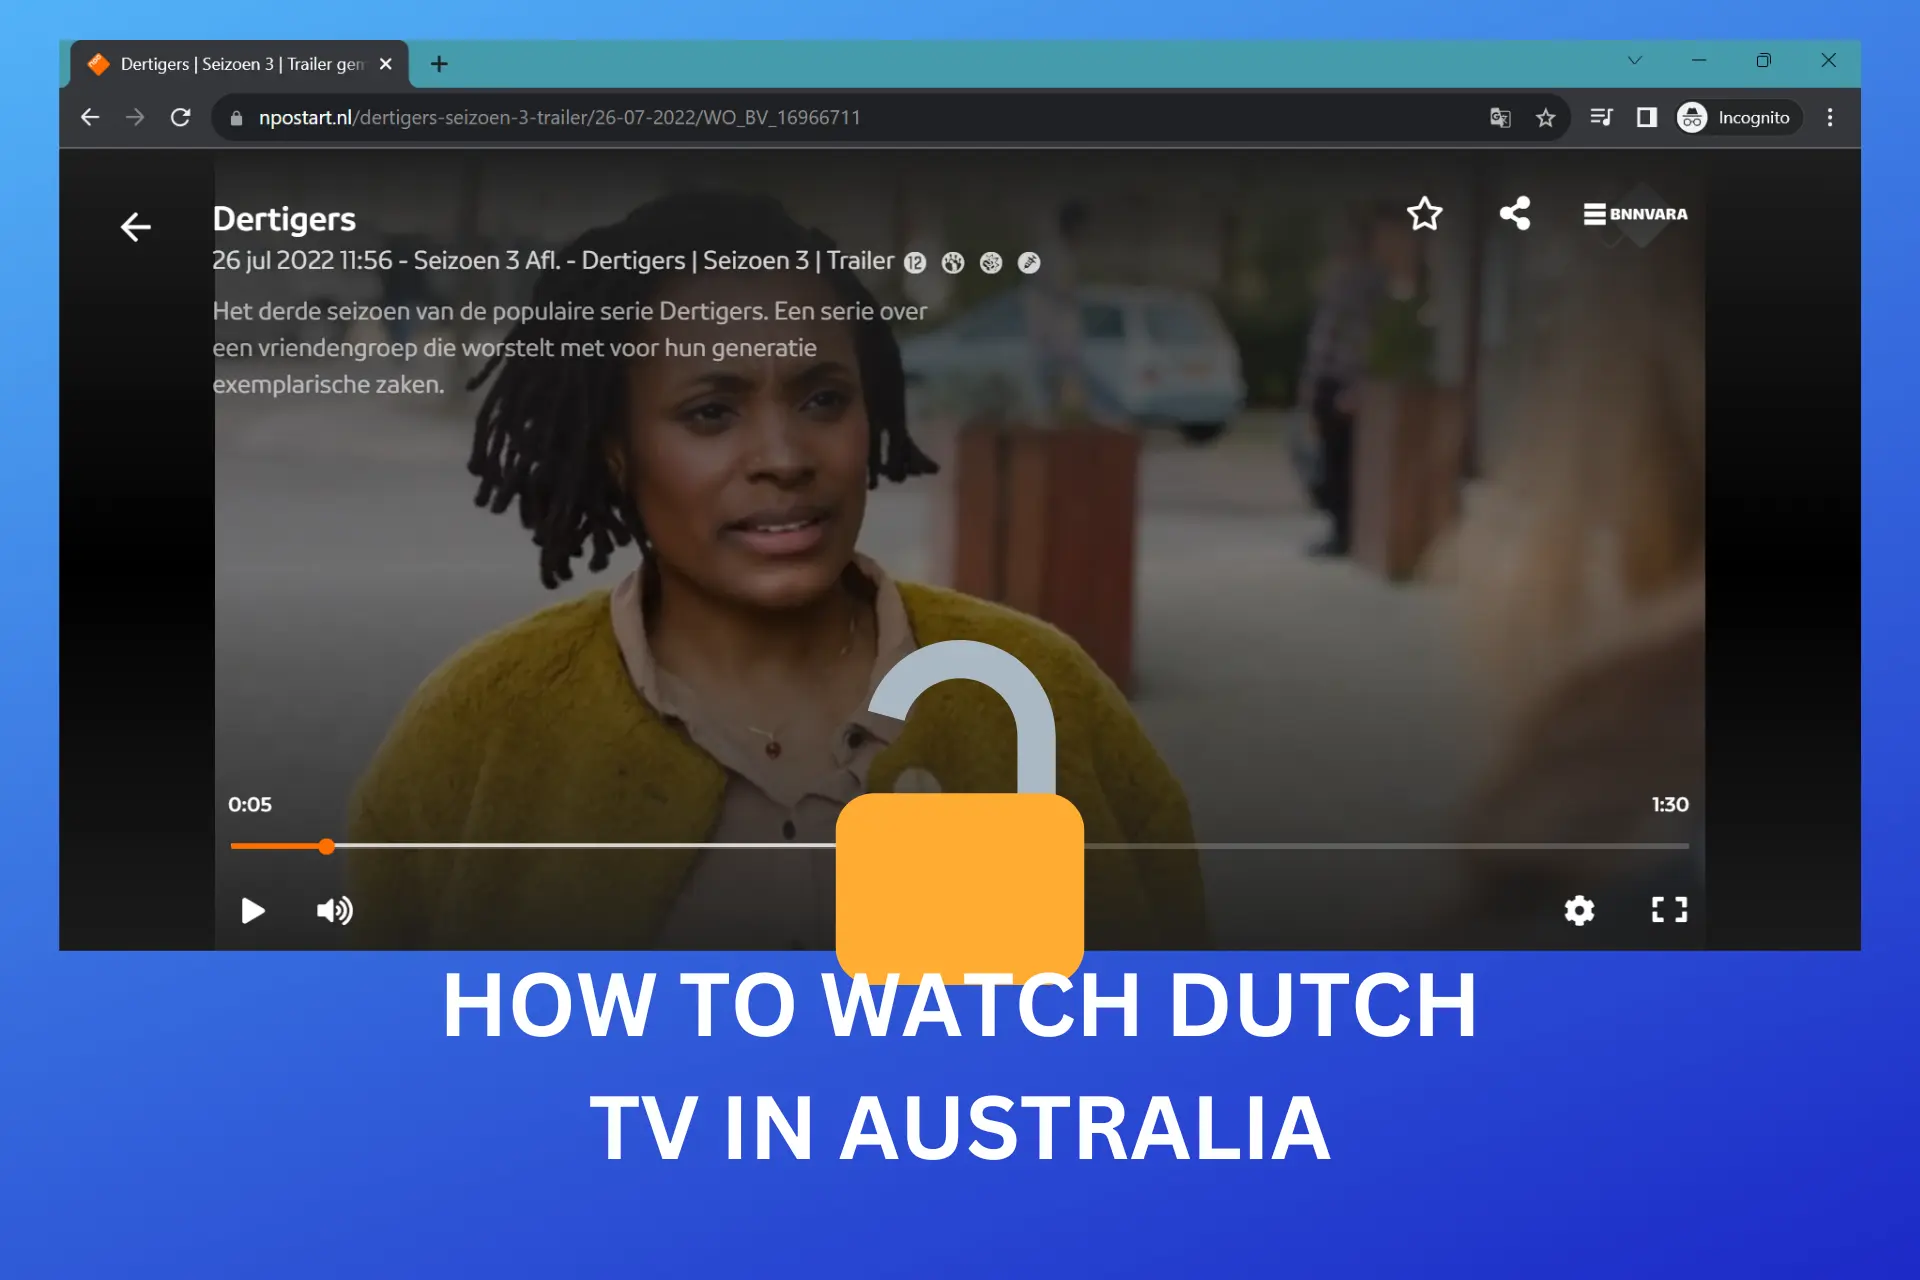 HOW TO WATCH DUTCH TV IN AUSTRALIA